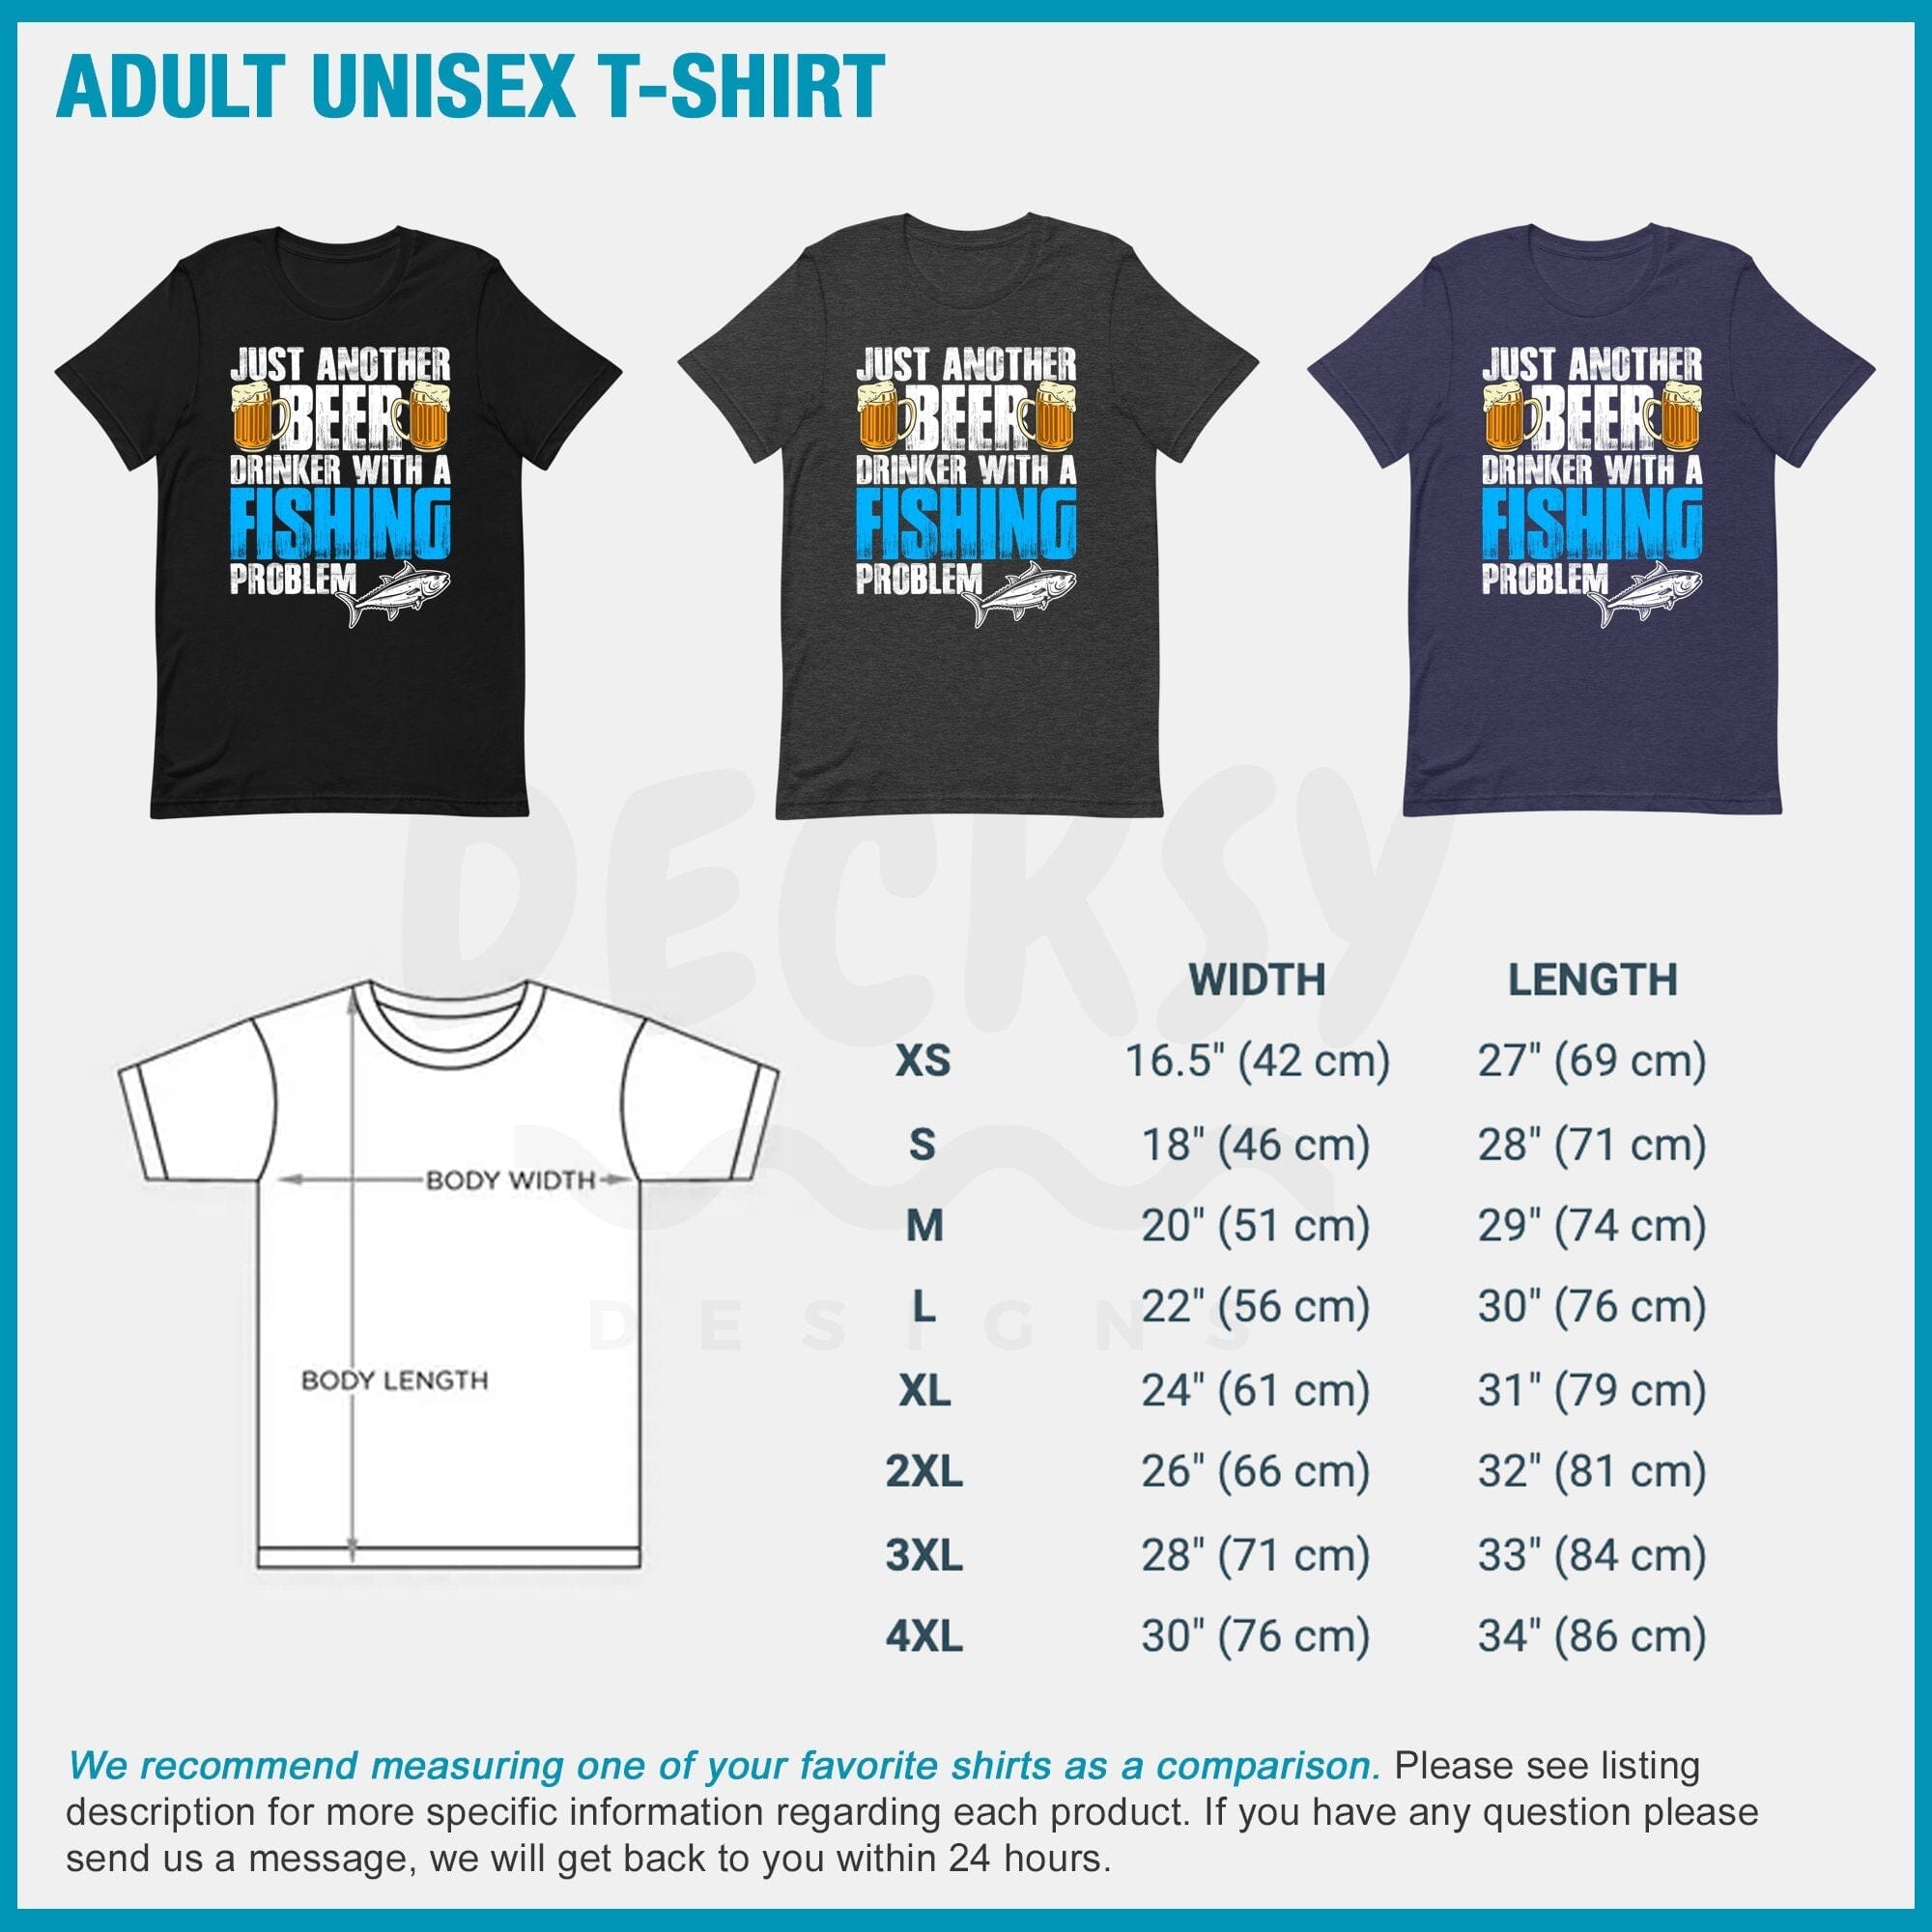 Fishing Shirt, Fisherman Gift-Clothing:Gender-Neutral Adult Clothing:Tops & Tees:T-shirts:Graphic Tees-DecksyDesigns